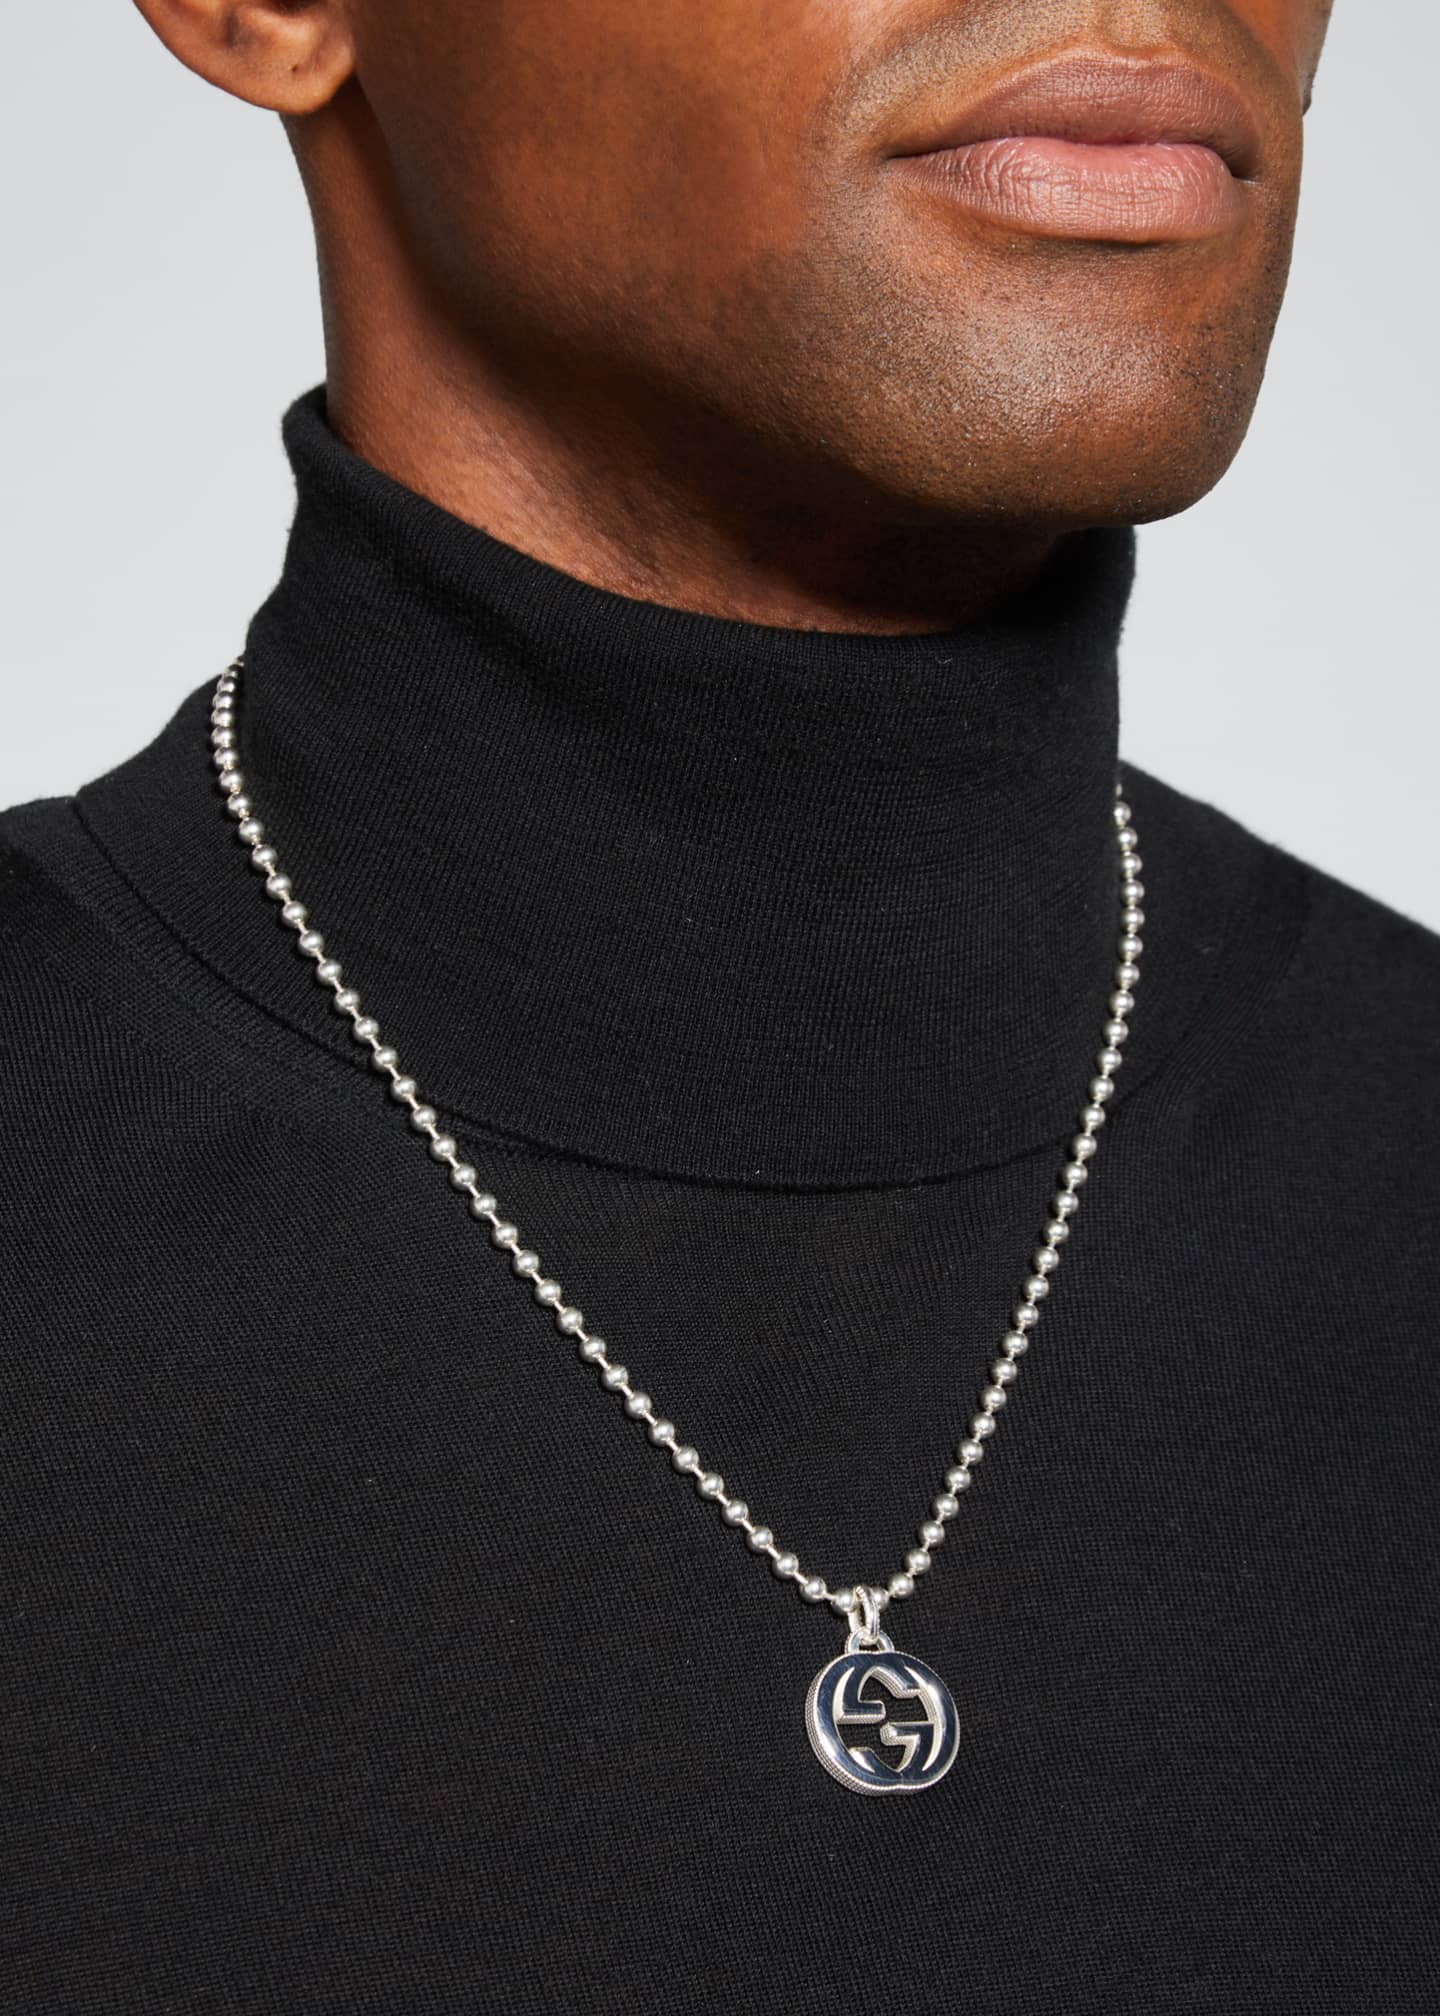 Gucci Men's Britt Interlocking GG Pendant Necklace